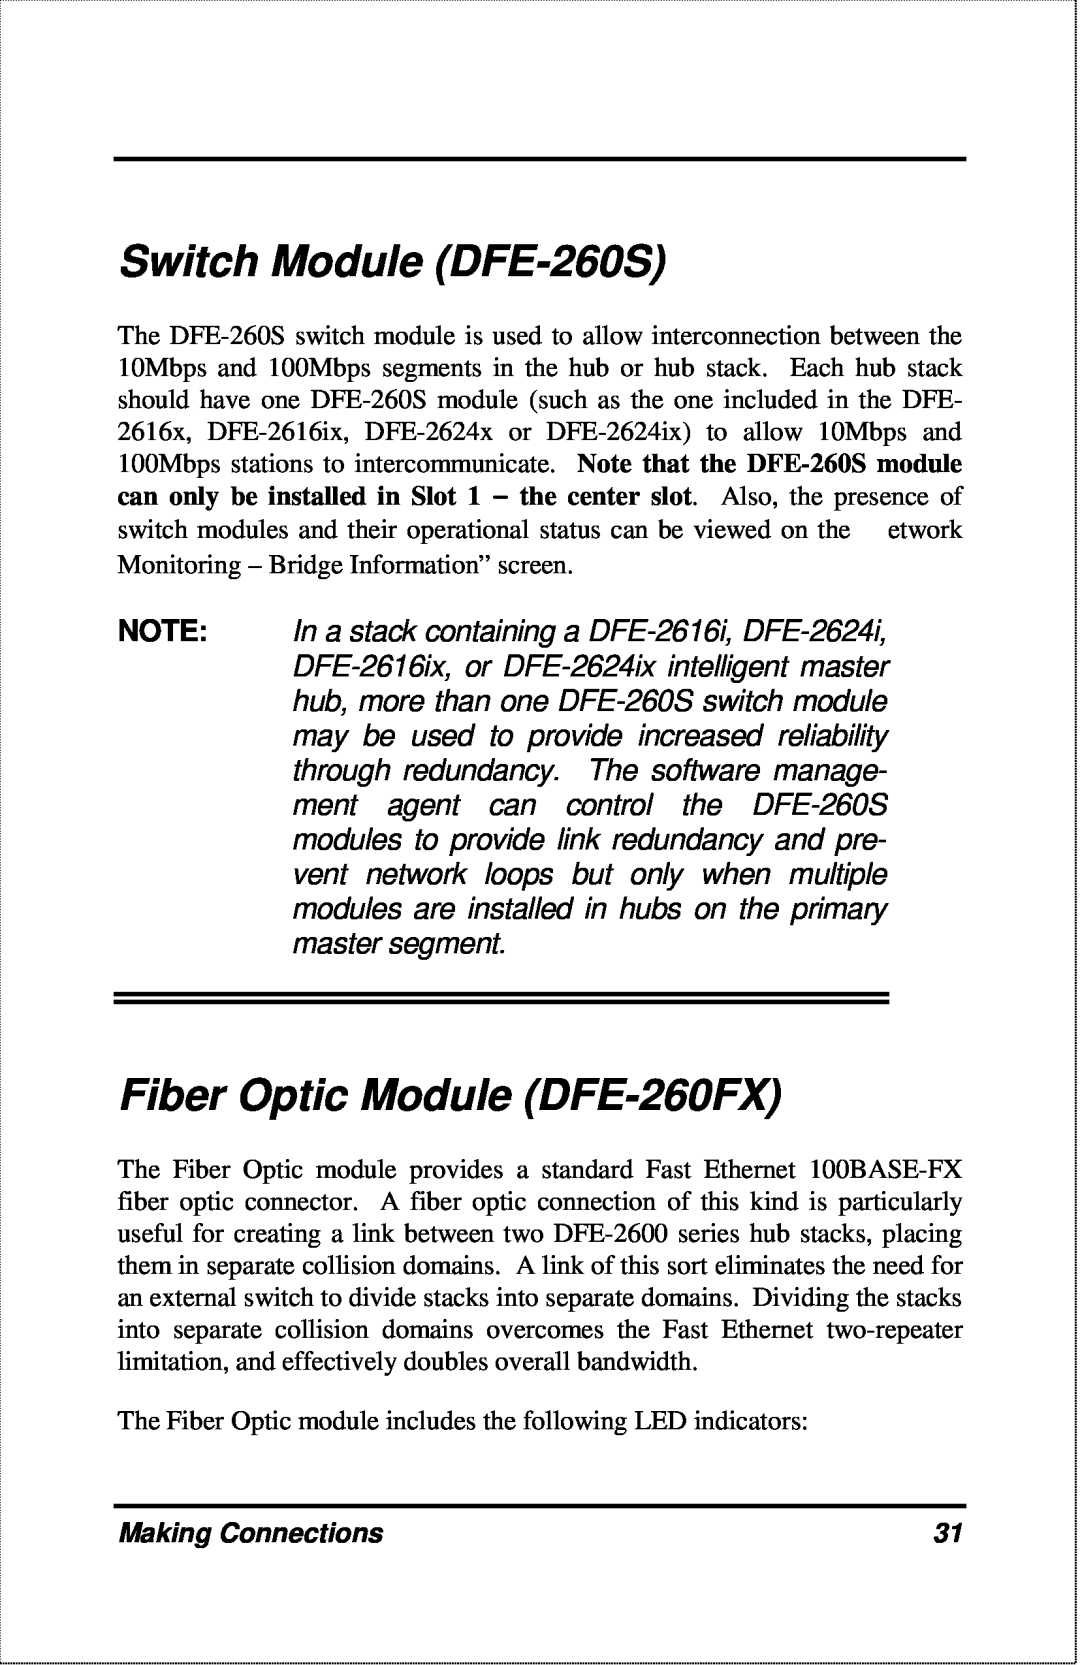 D-Link DFE-2600 manual Switch Module DFE-260S, Fiber Optic Module DFE-260FX, Making Connections 